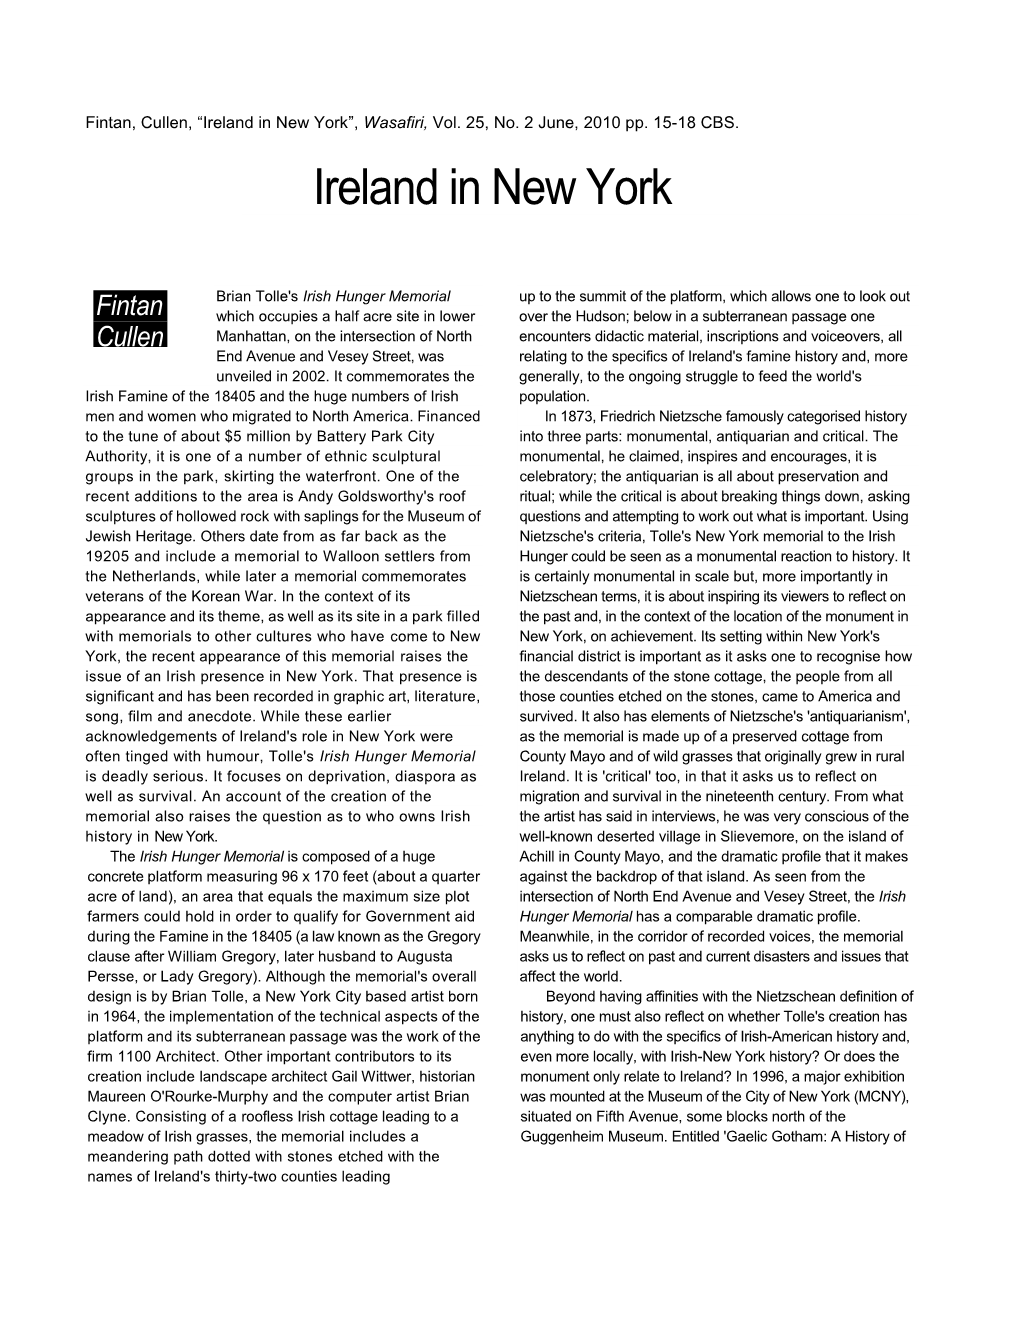 Ireland in New York”, Wasafiri, Vol